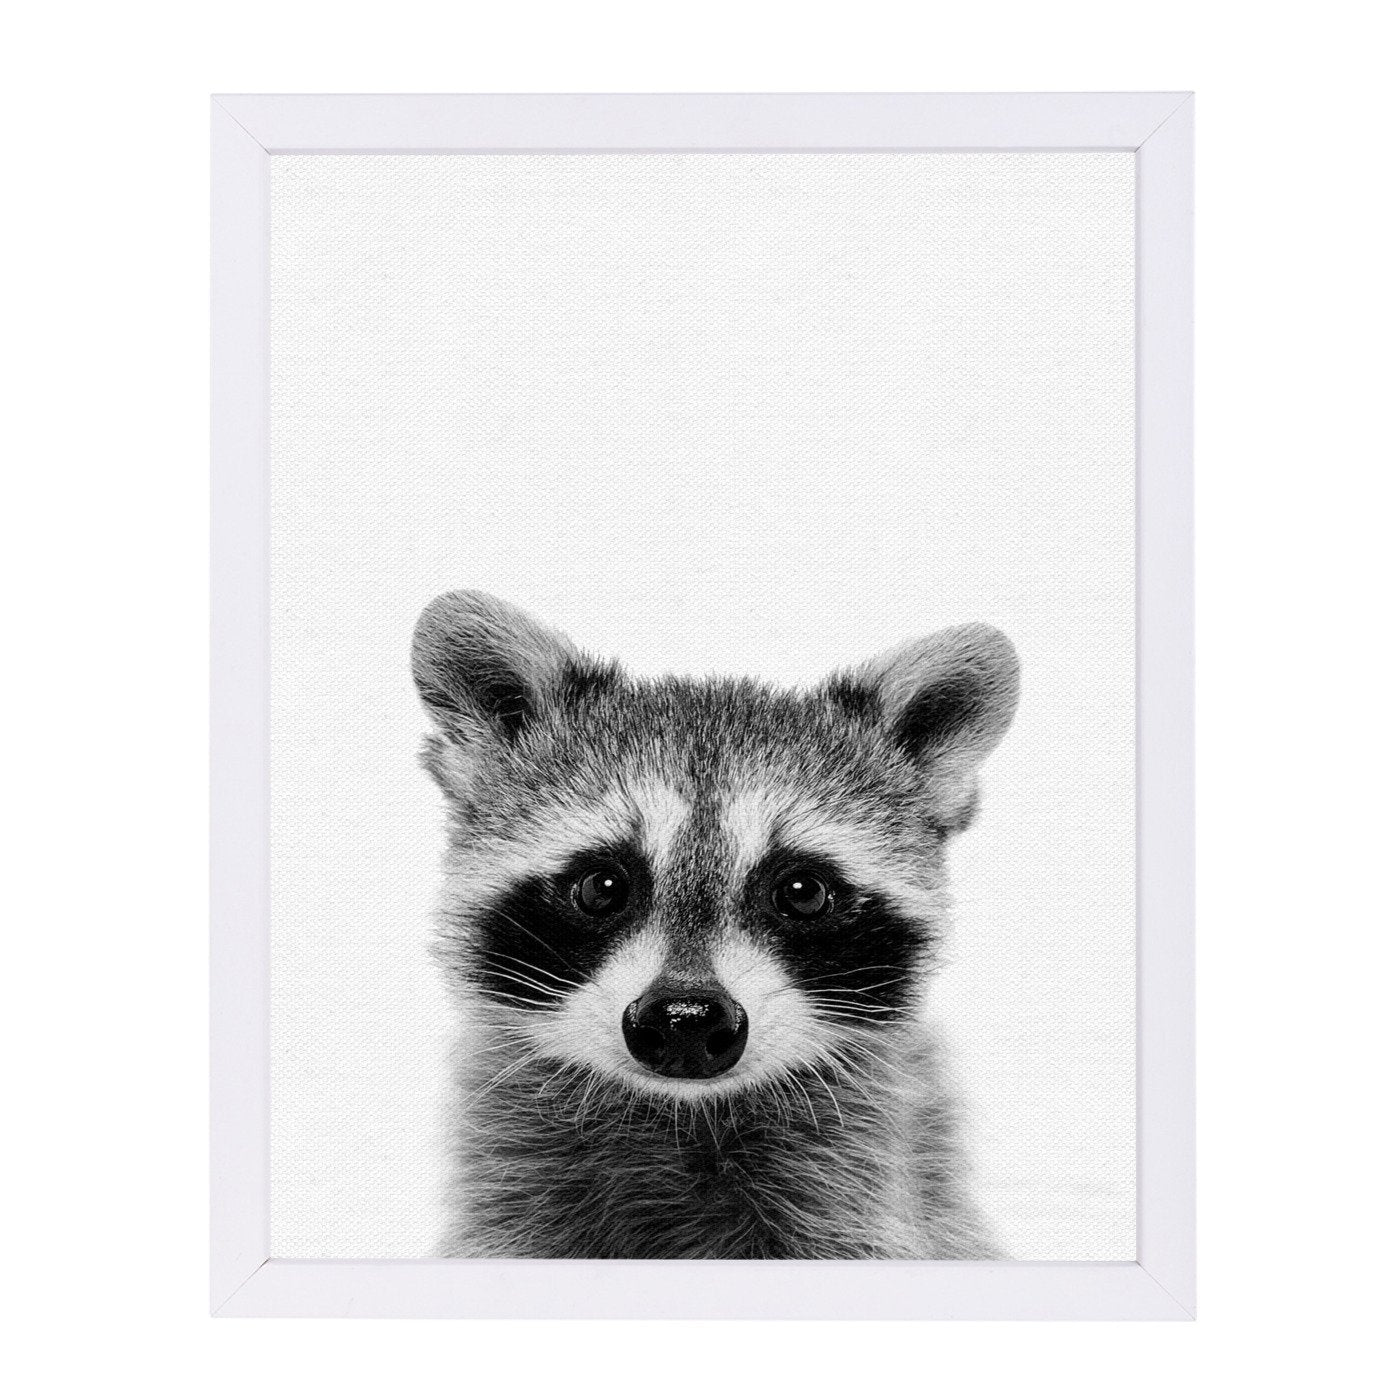 Raccoon By Nuada - Framed Print - Americanflat